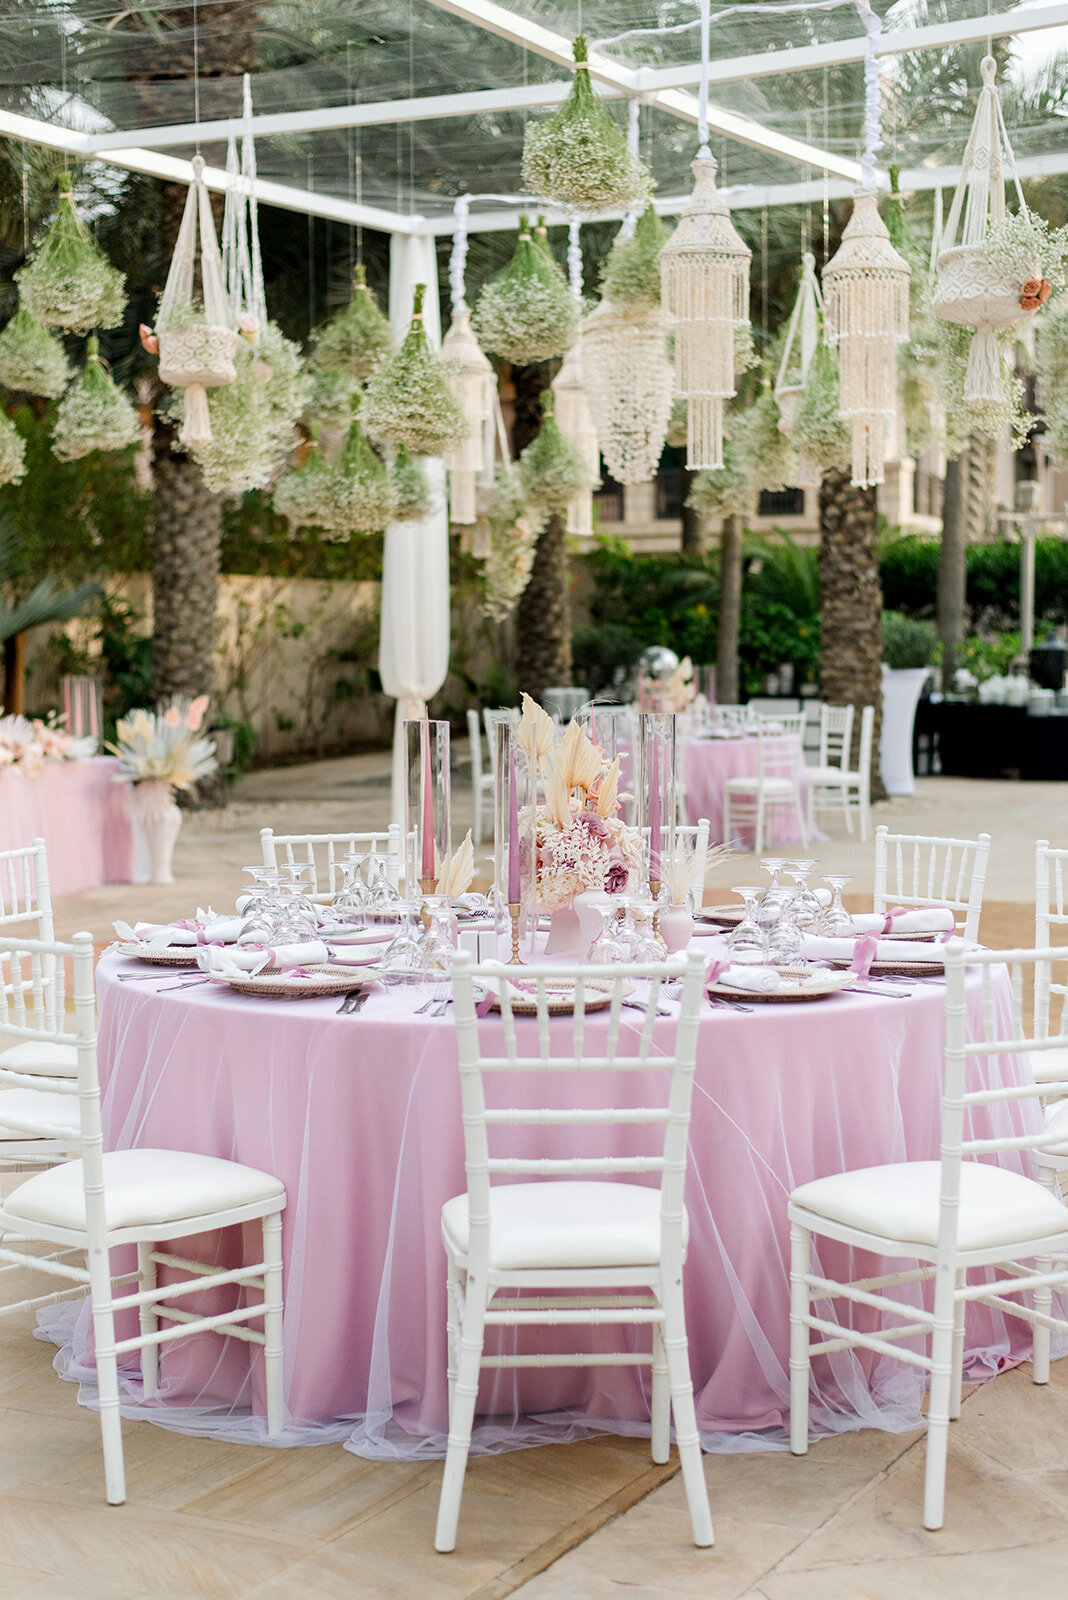 rock-your-event-wedding-styling-planner-designer-dubai-UAE-romantic-bali-inspired-boho-celebration